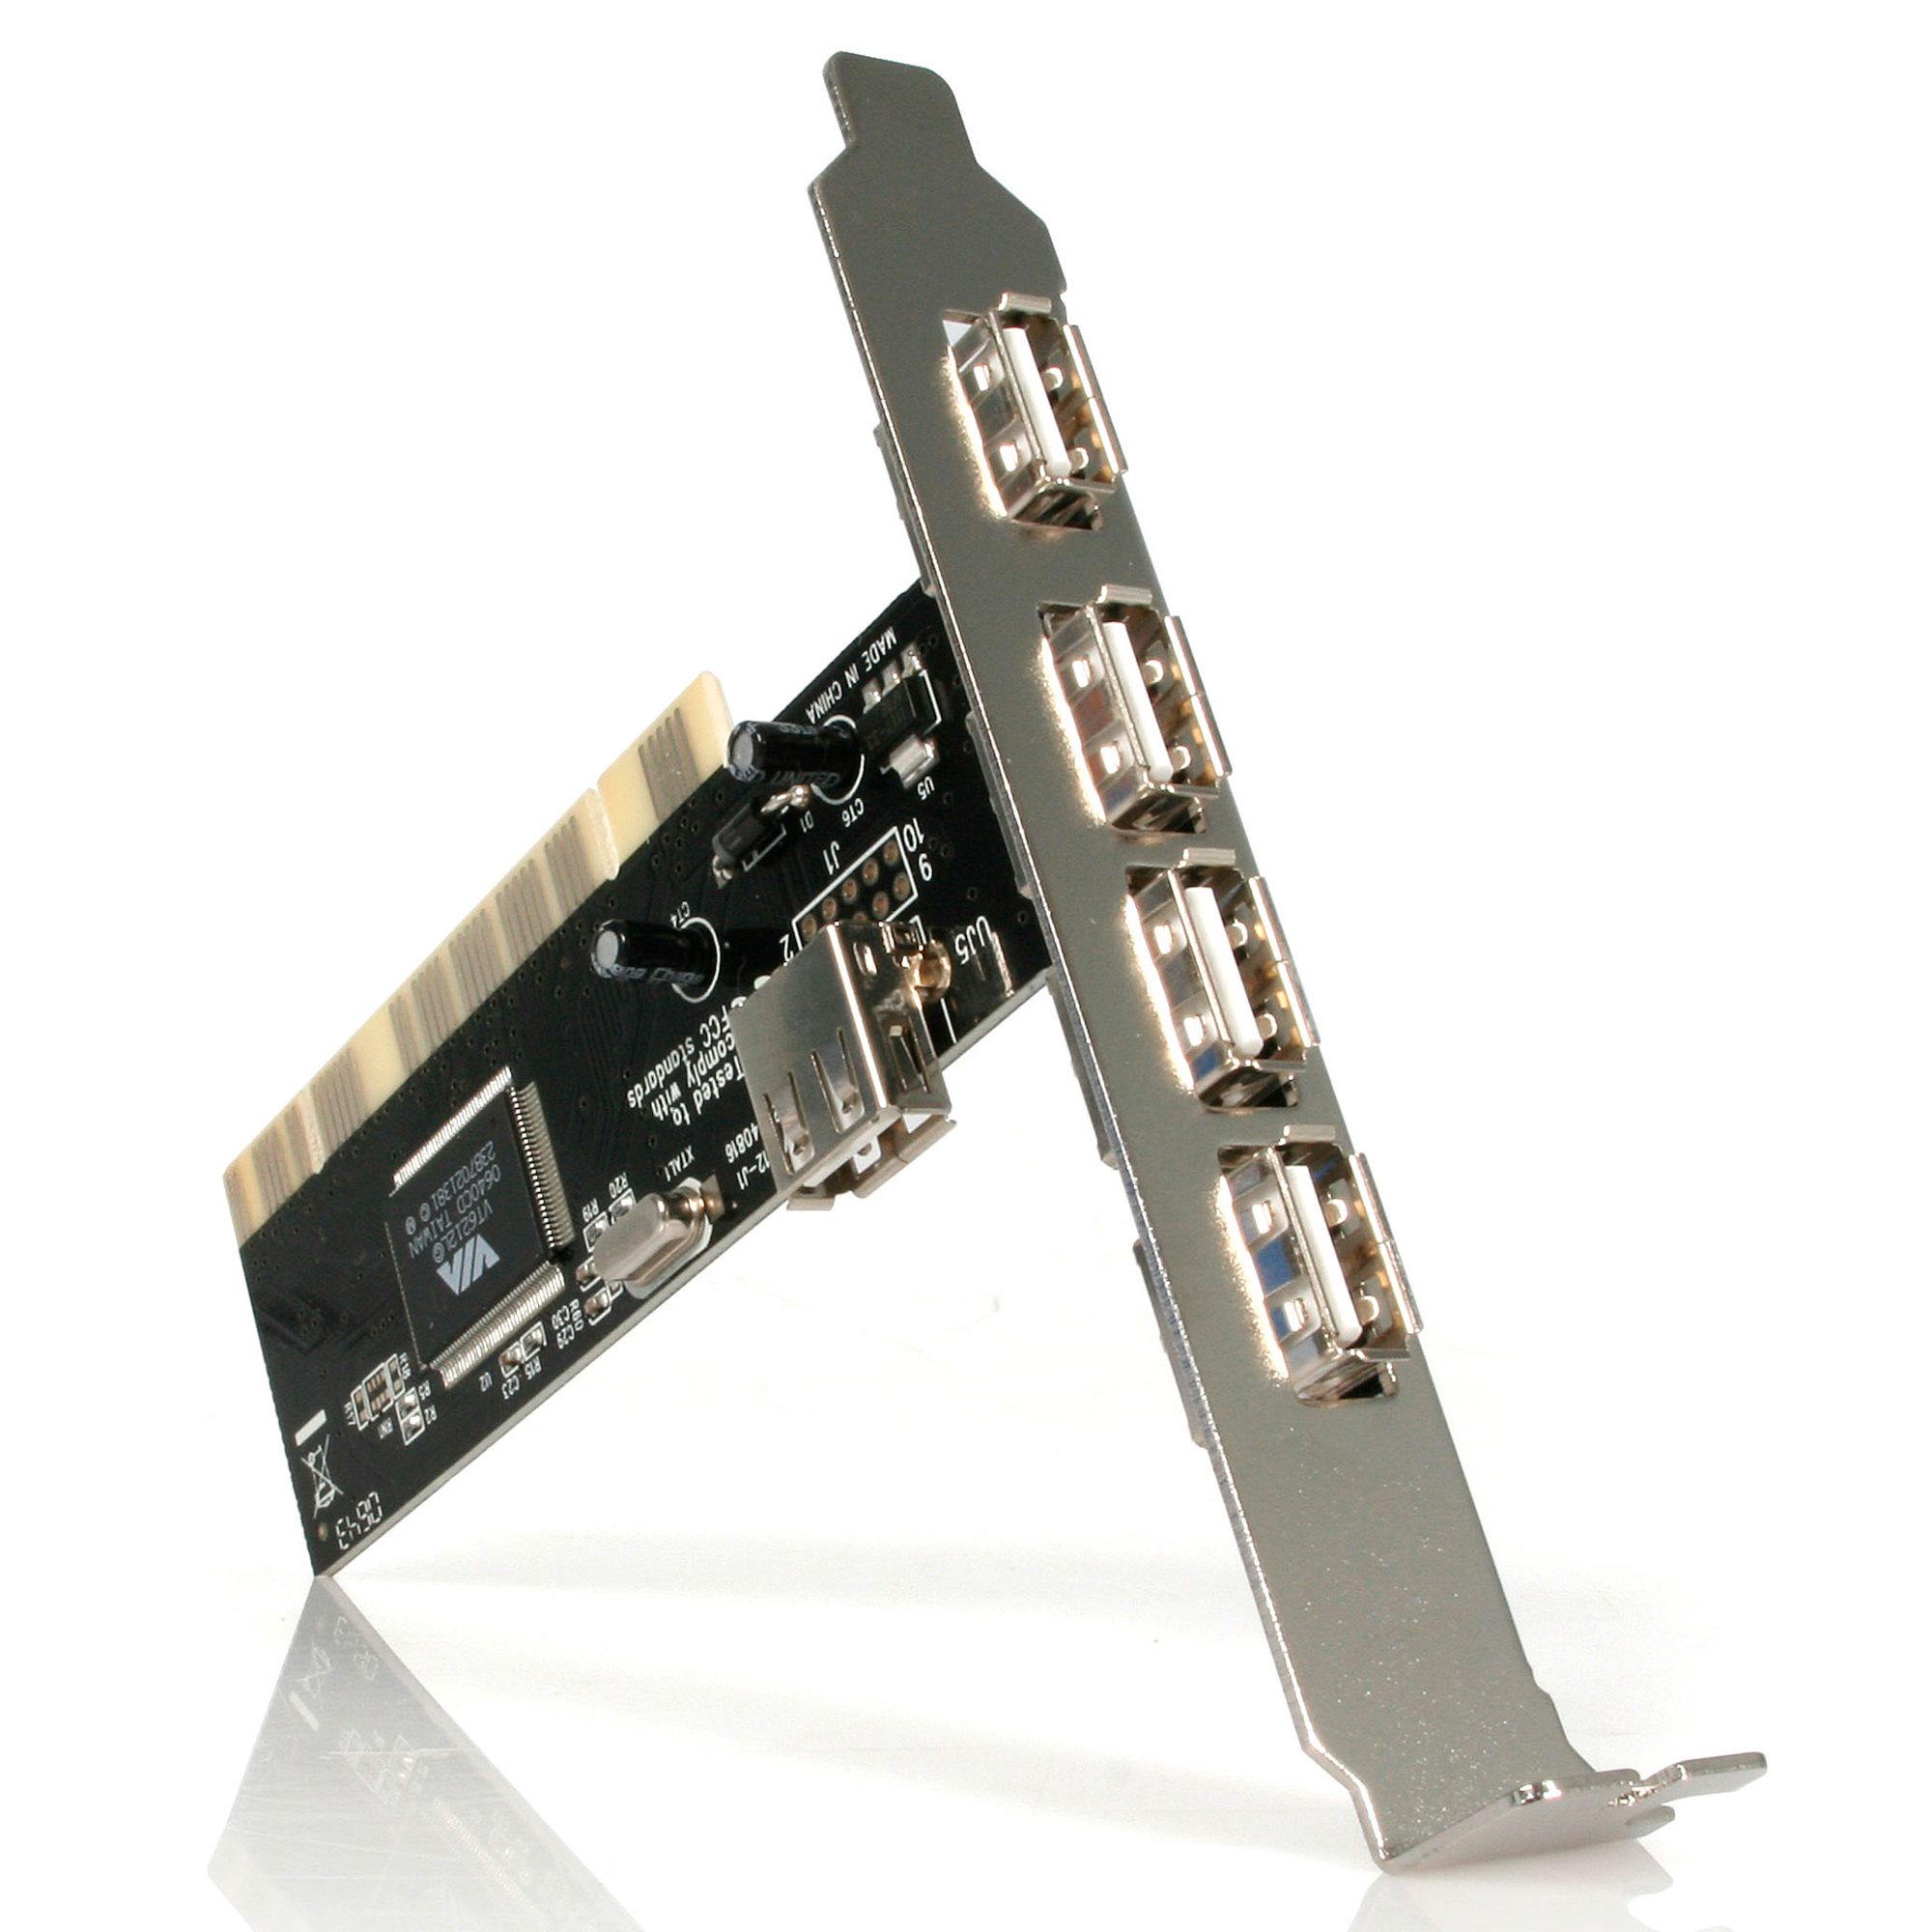 Fiasko vores Sway 5 Port PCI USB 2.0 Adapter Card - USB 2.0 Cards | StarTech.com